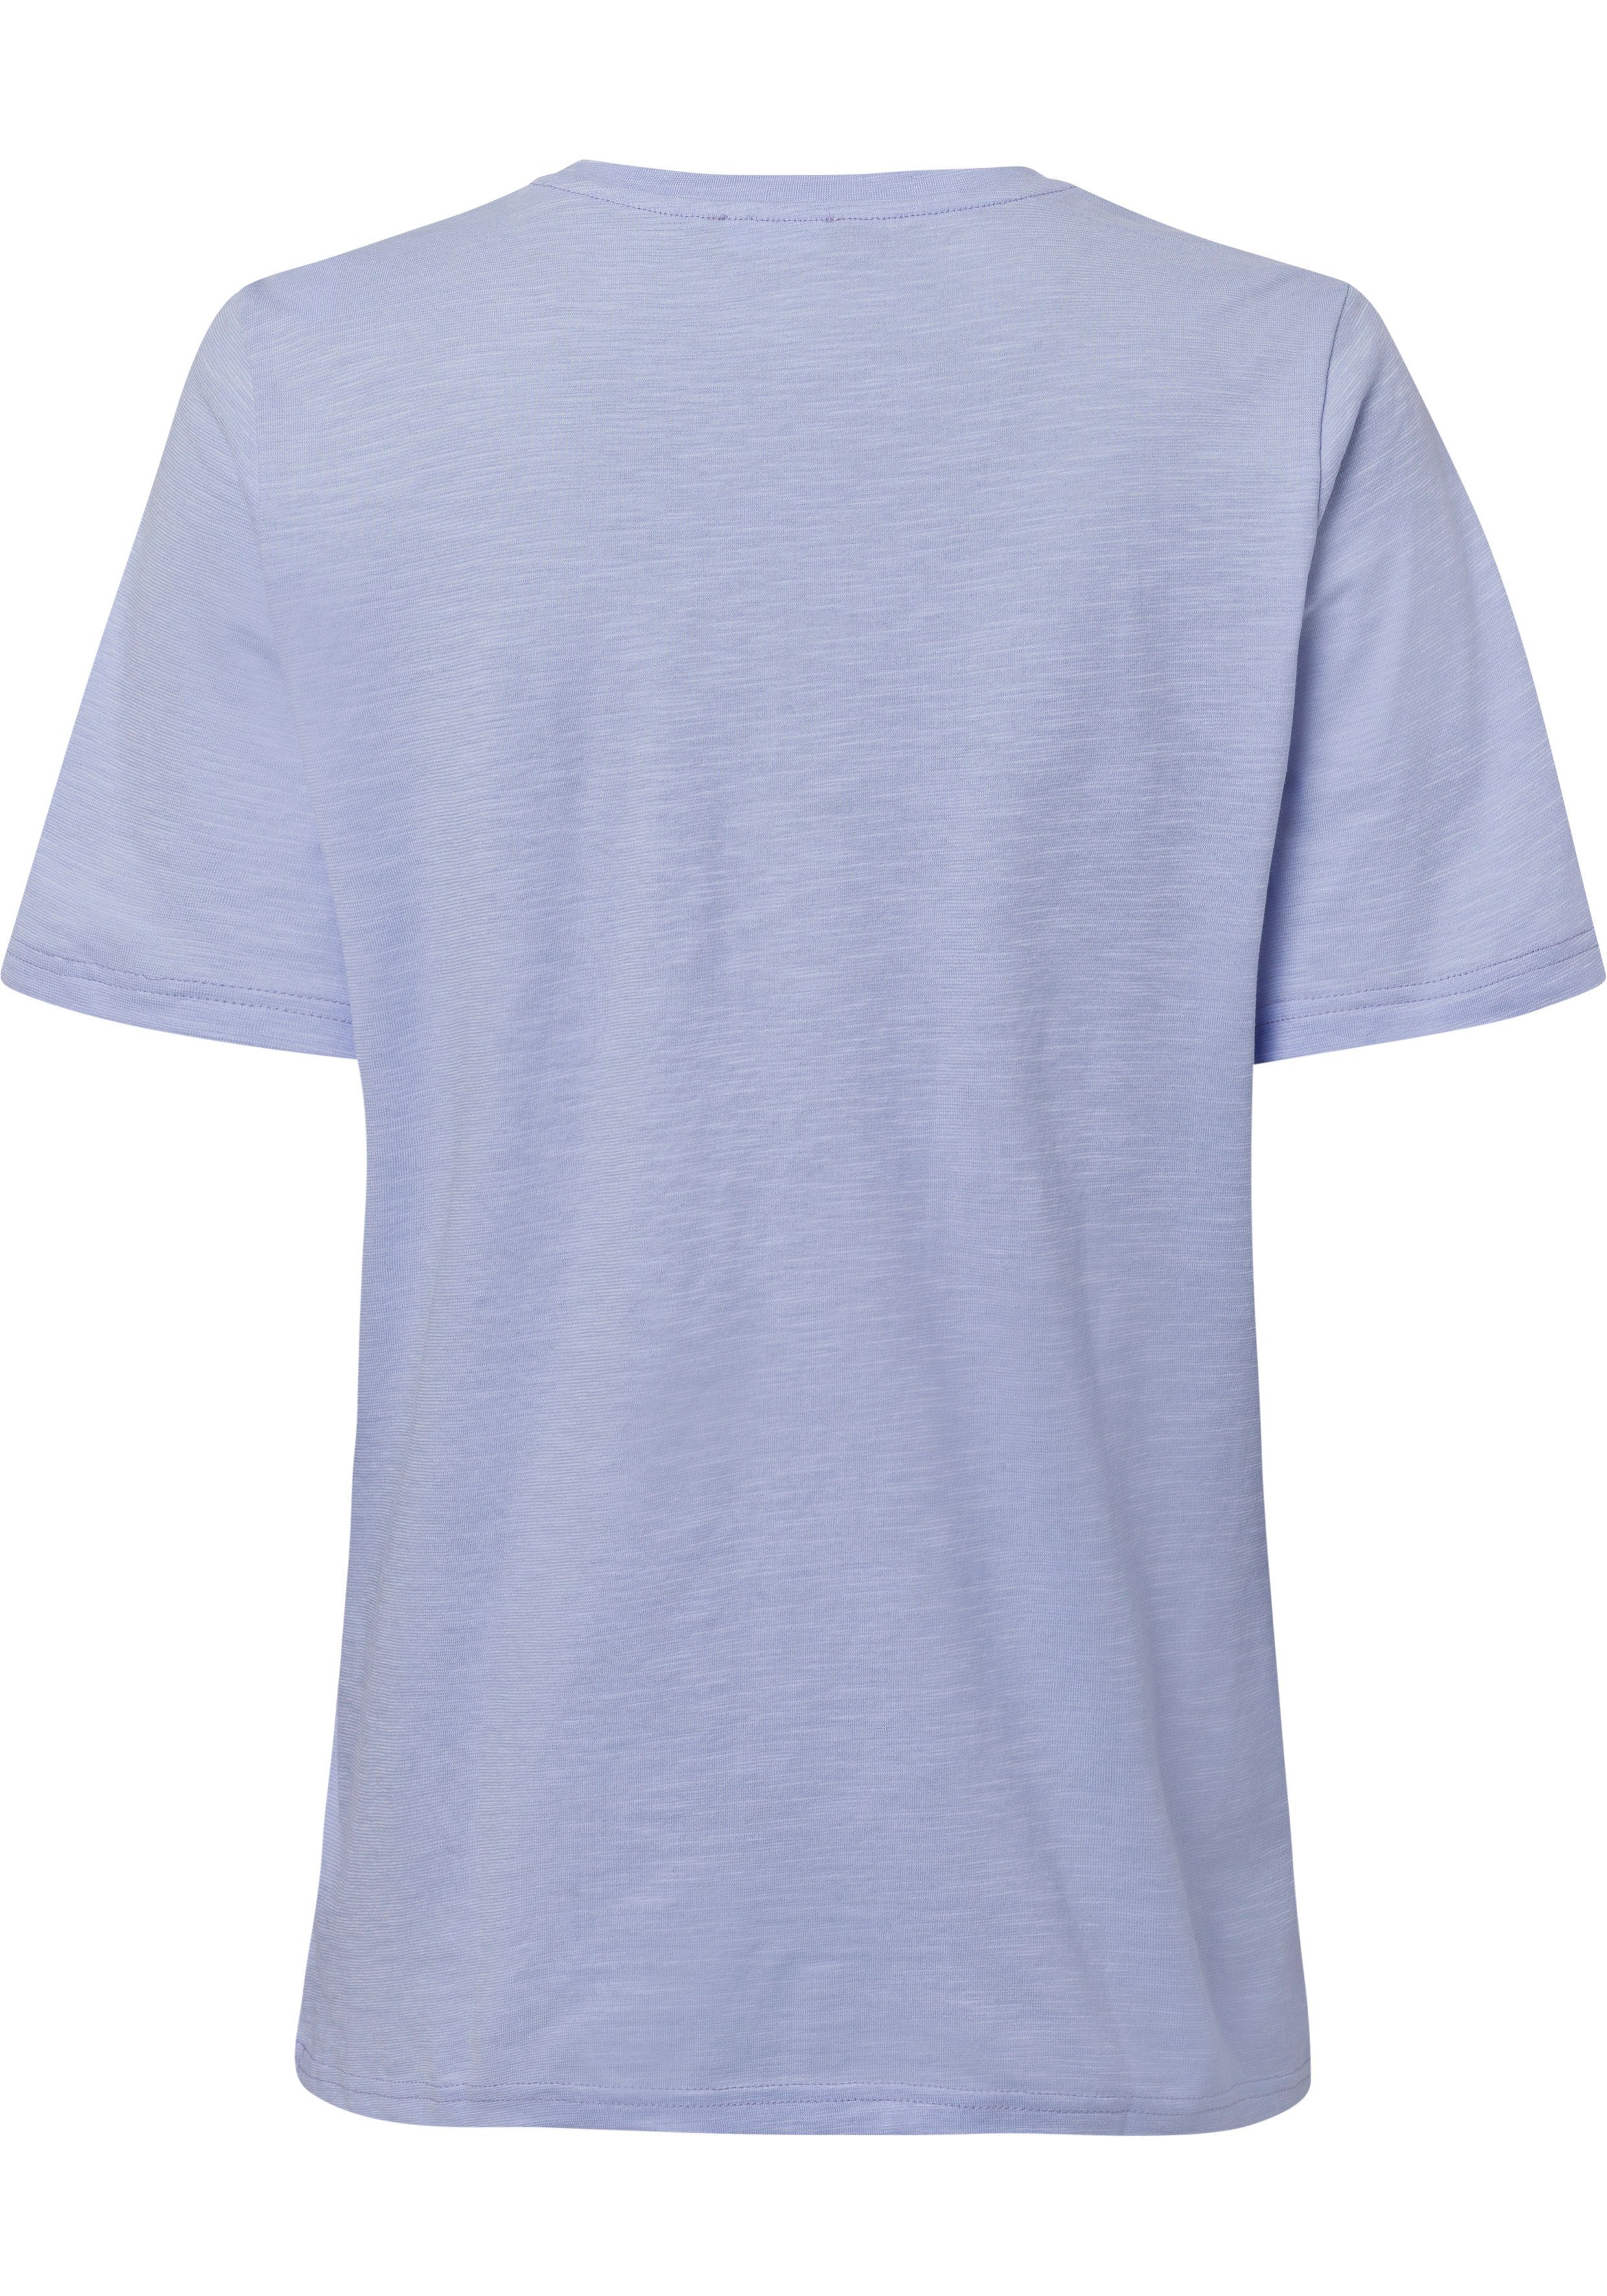 Benetton flieder United of T-Shirt Basic-Optik in cleaner Colors